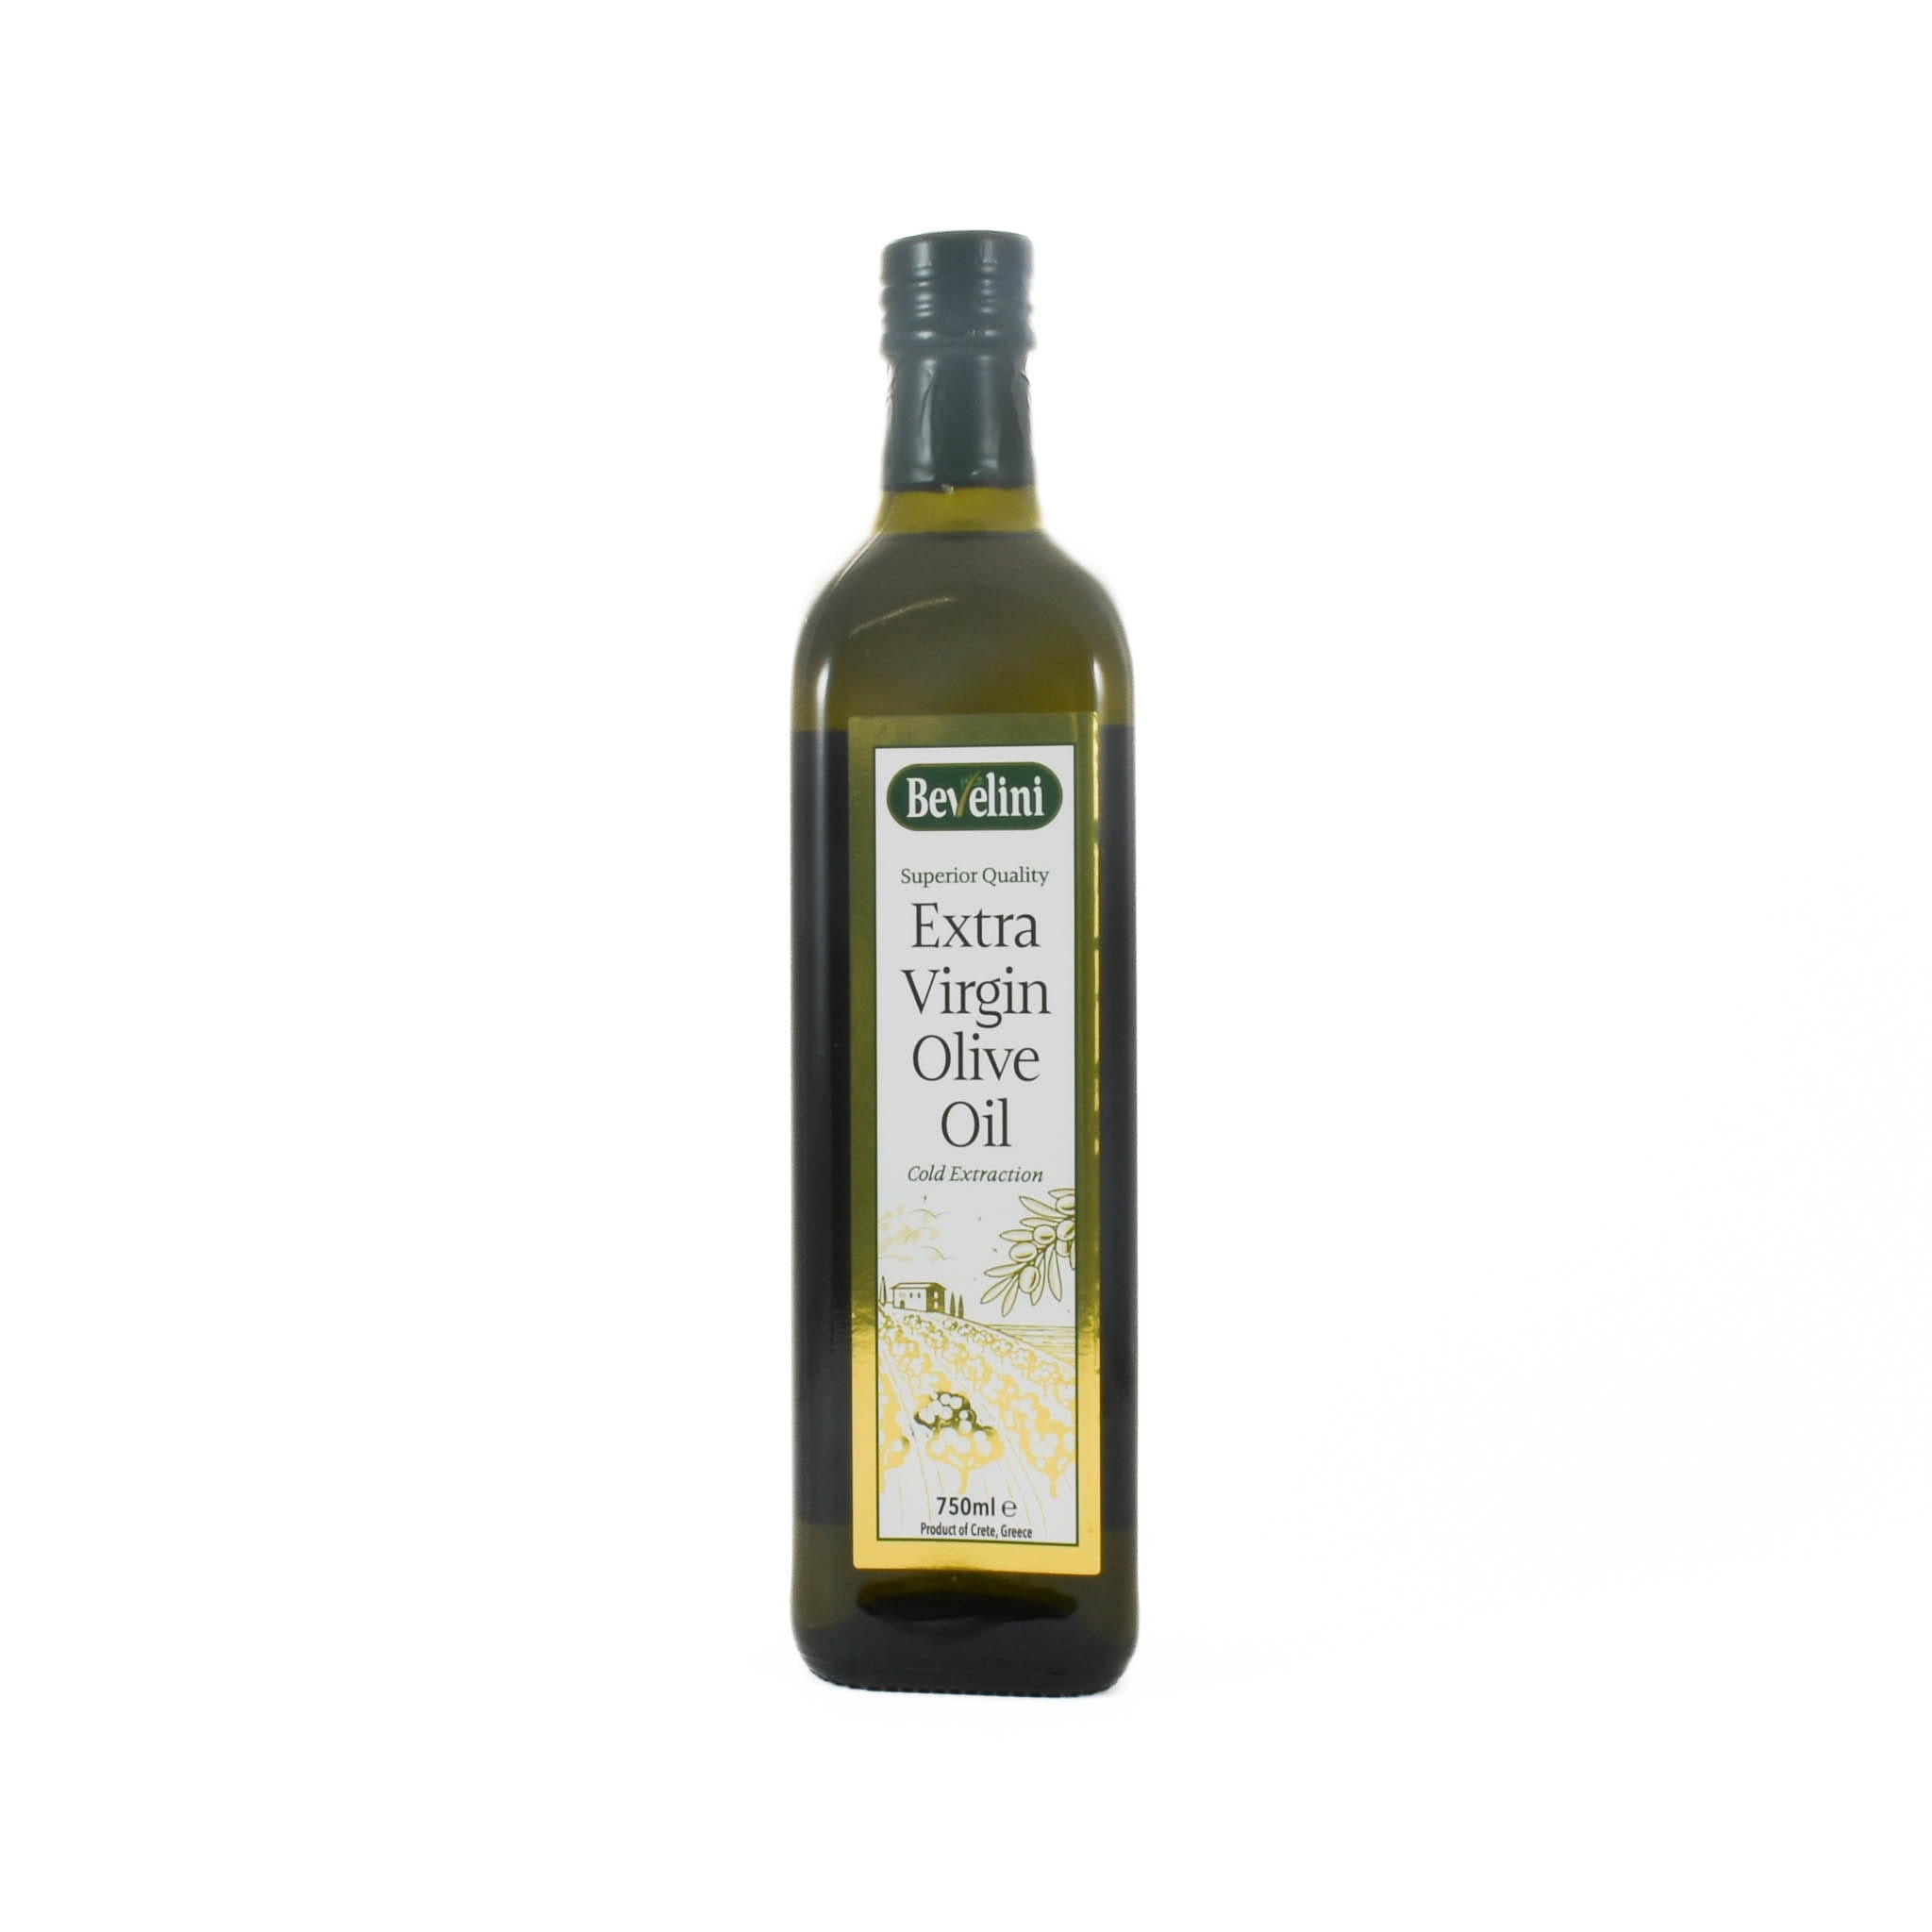 Bevelini Extra Virgin Olive Oil, 750ml